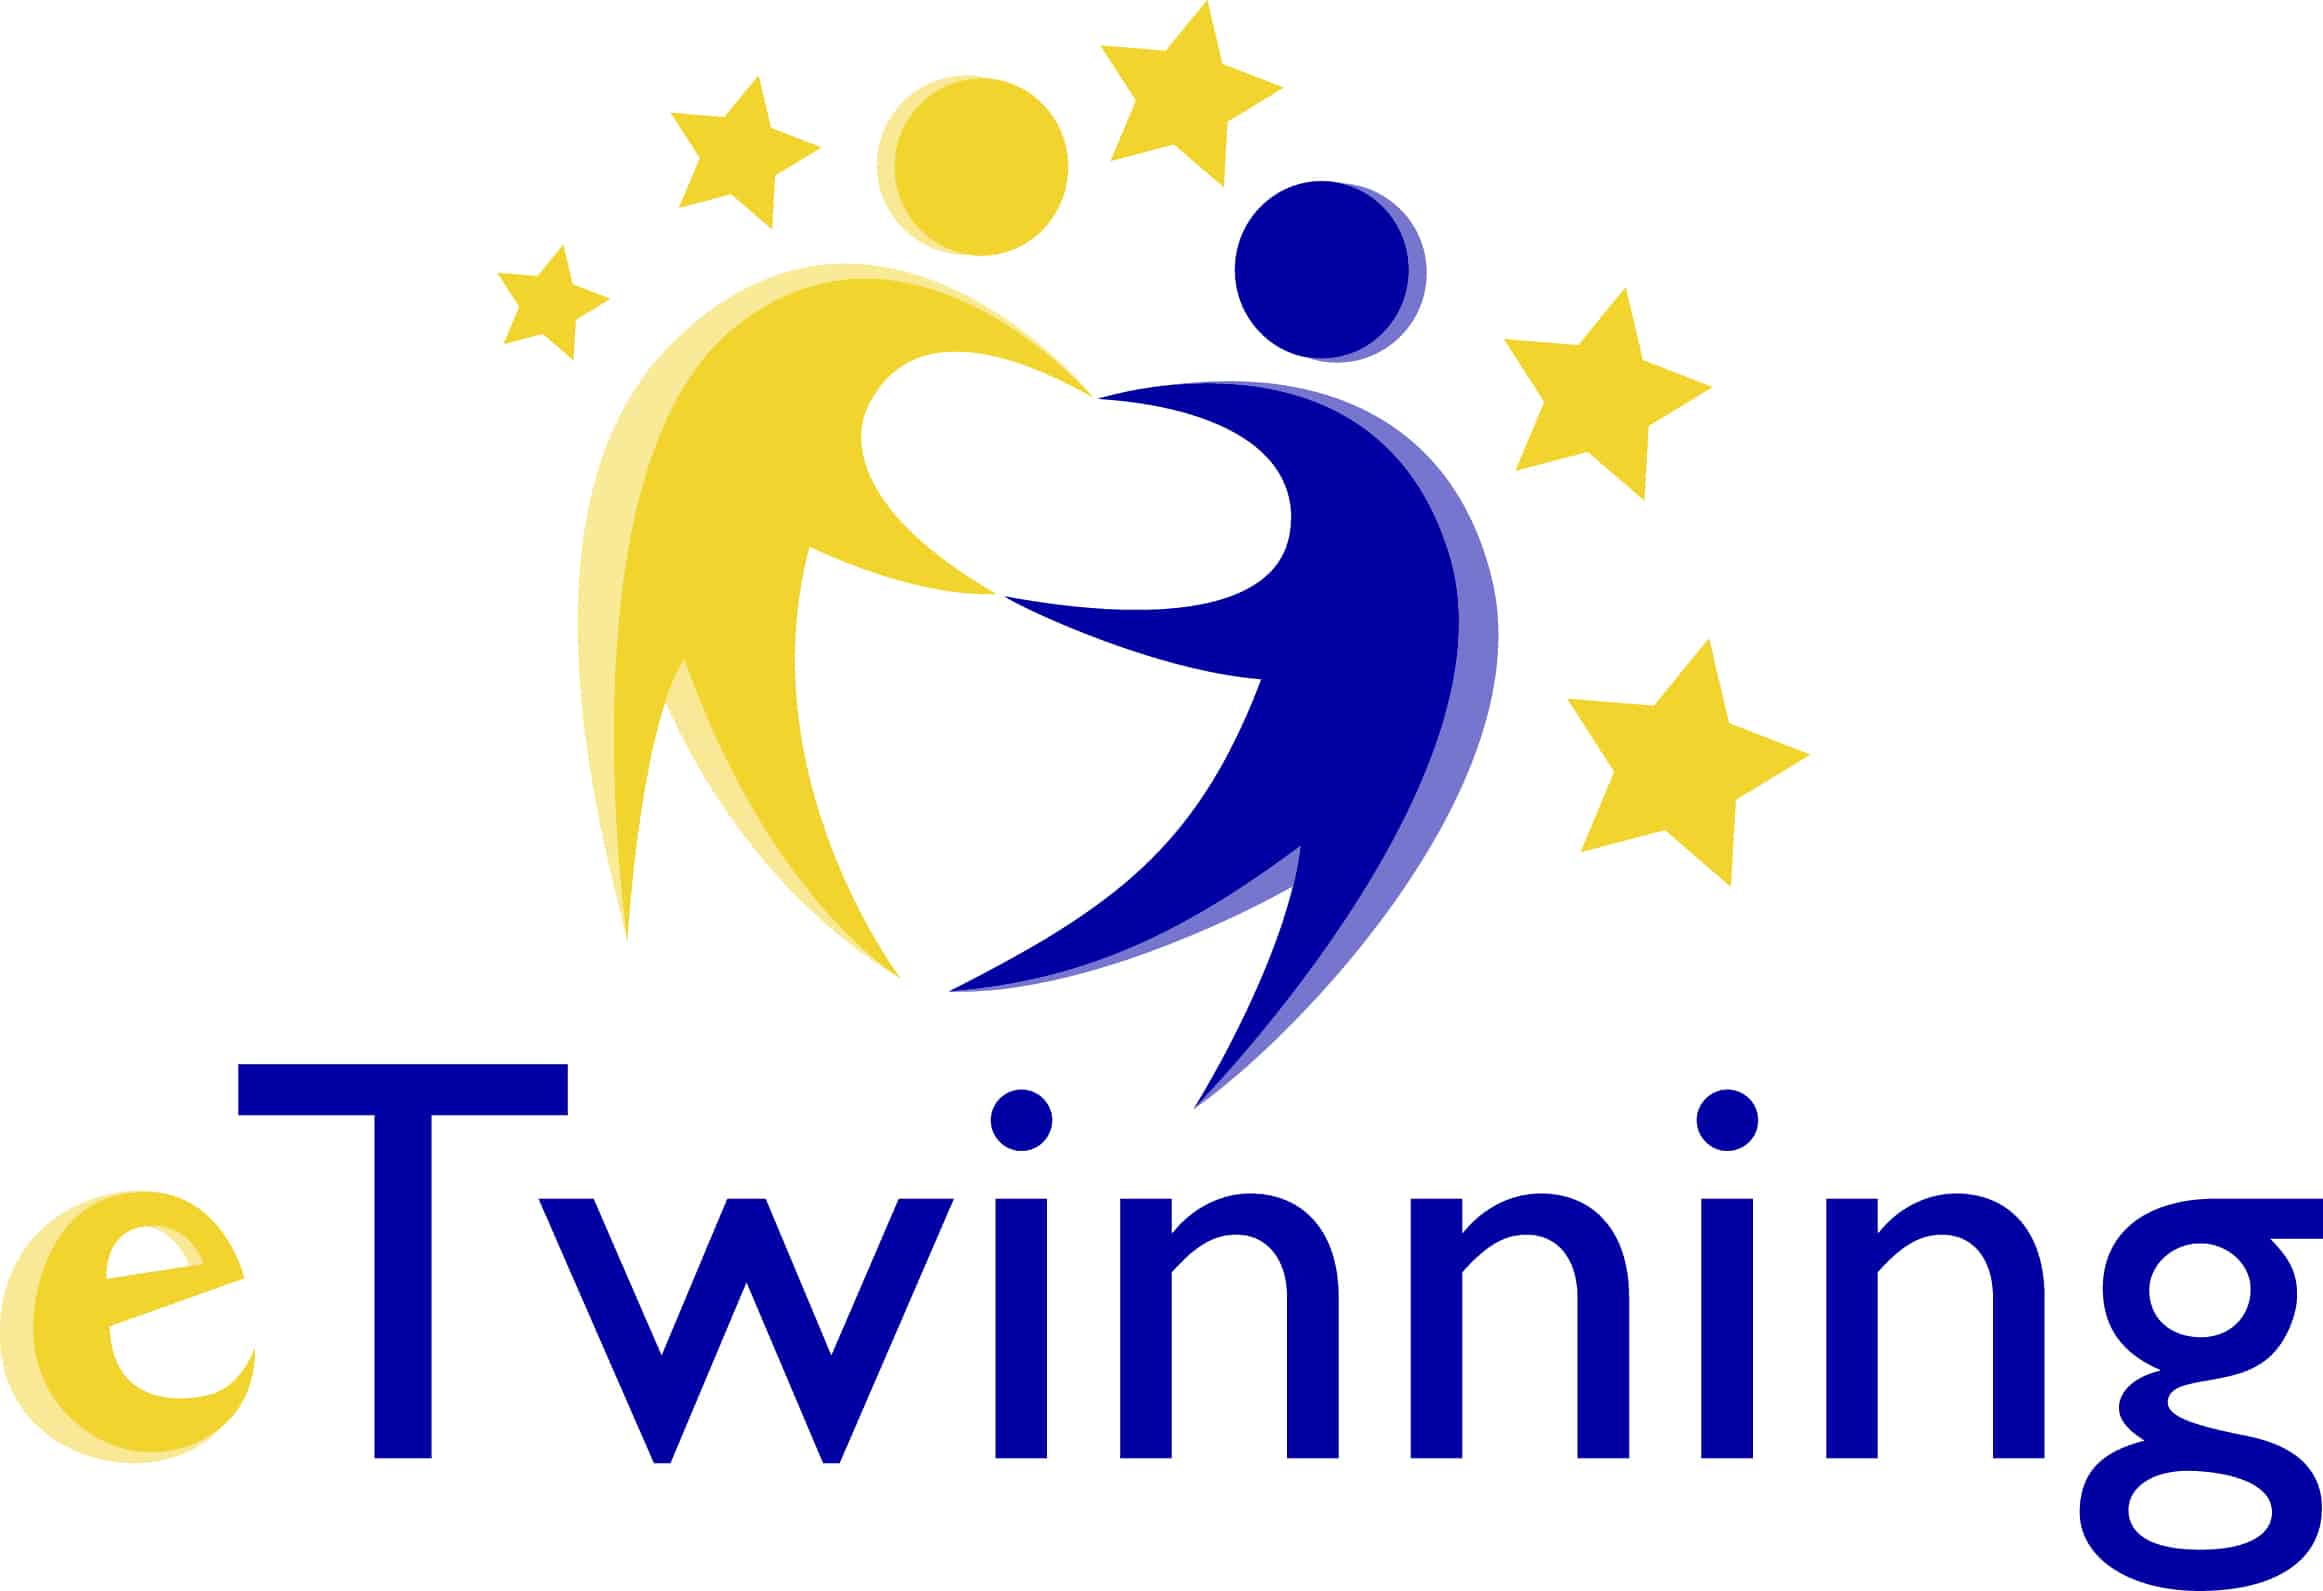 Logo del proyecto eTwinning